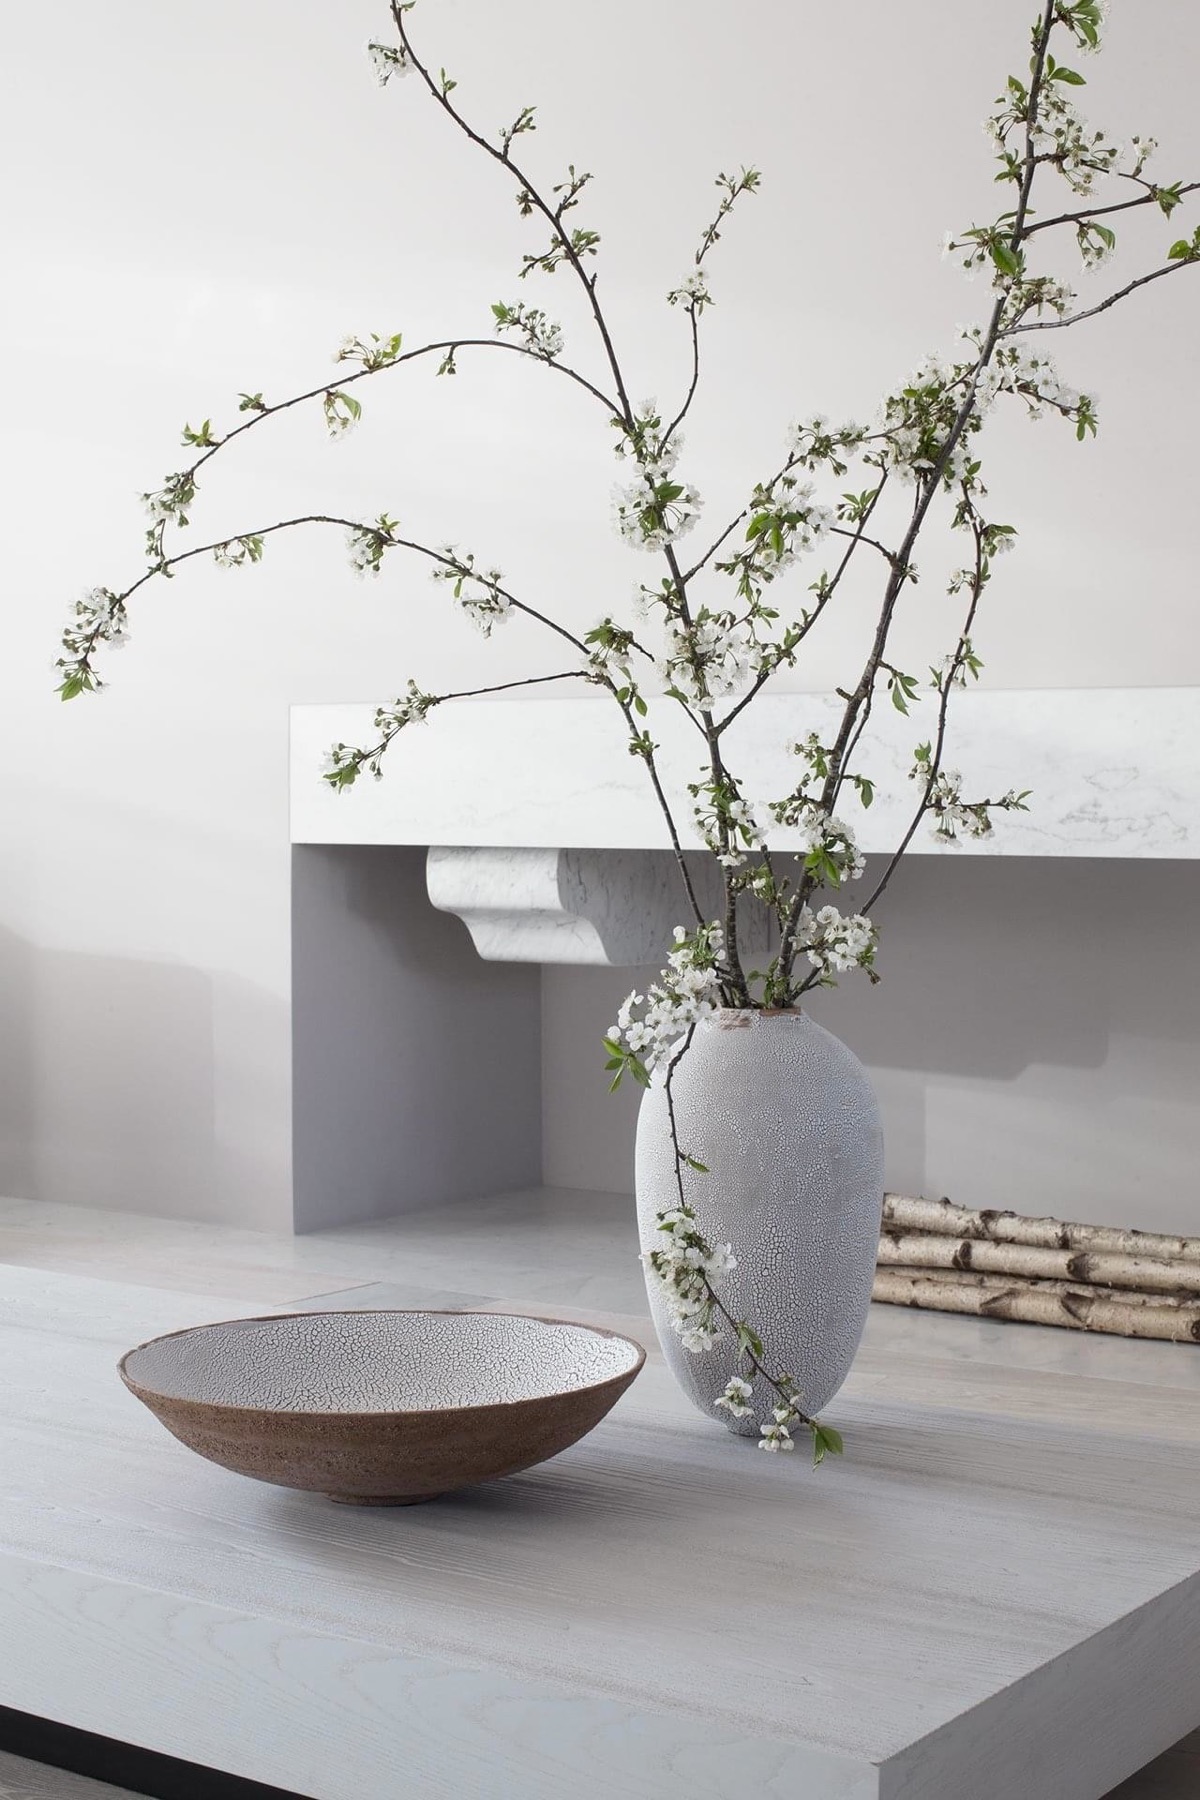 decorative-vase-and-bowl-set-600x900.jpg